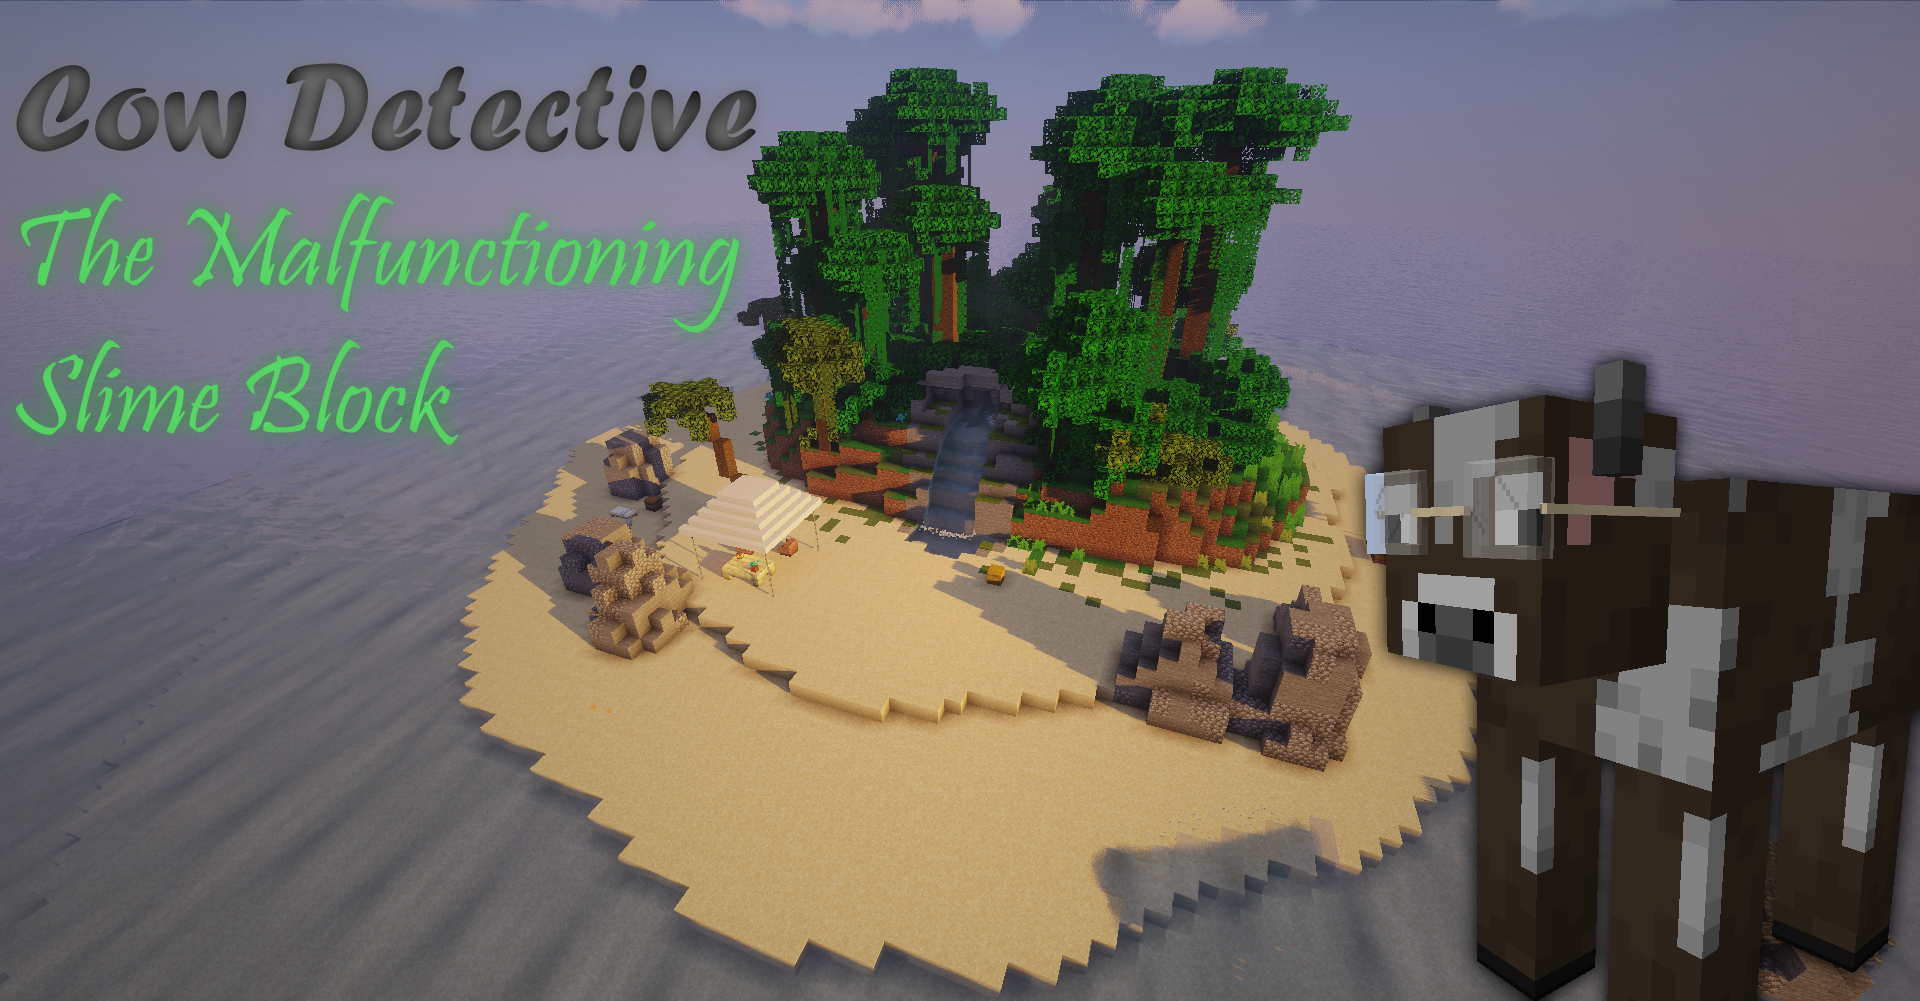 Descarca Cow Detective: The Malfunctioning Slime Block pentru Minecraft 1.16.4